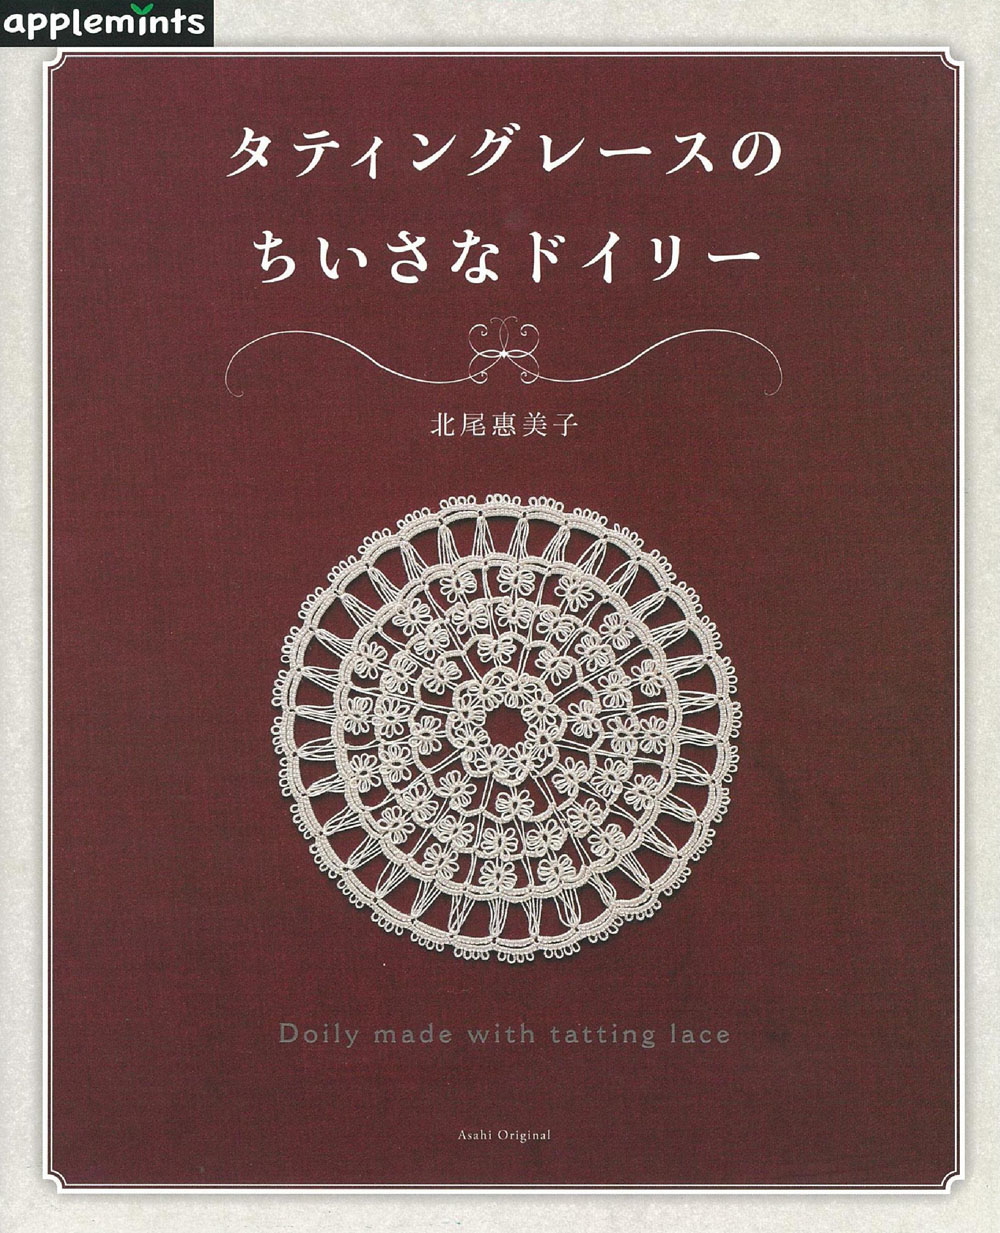 Tatting of small doily (Asahi original)